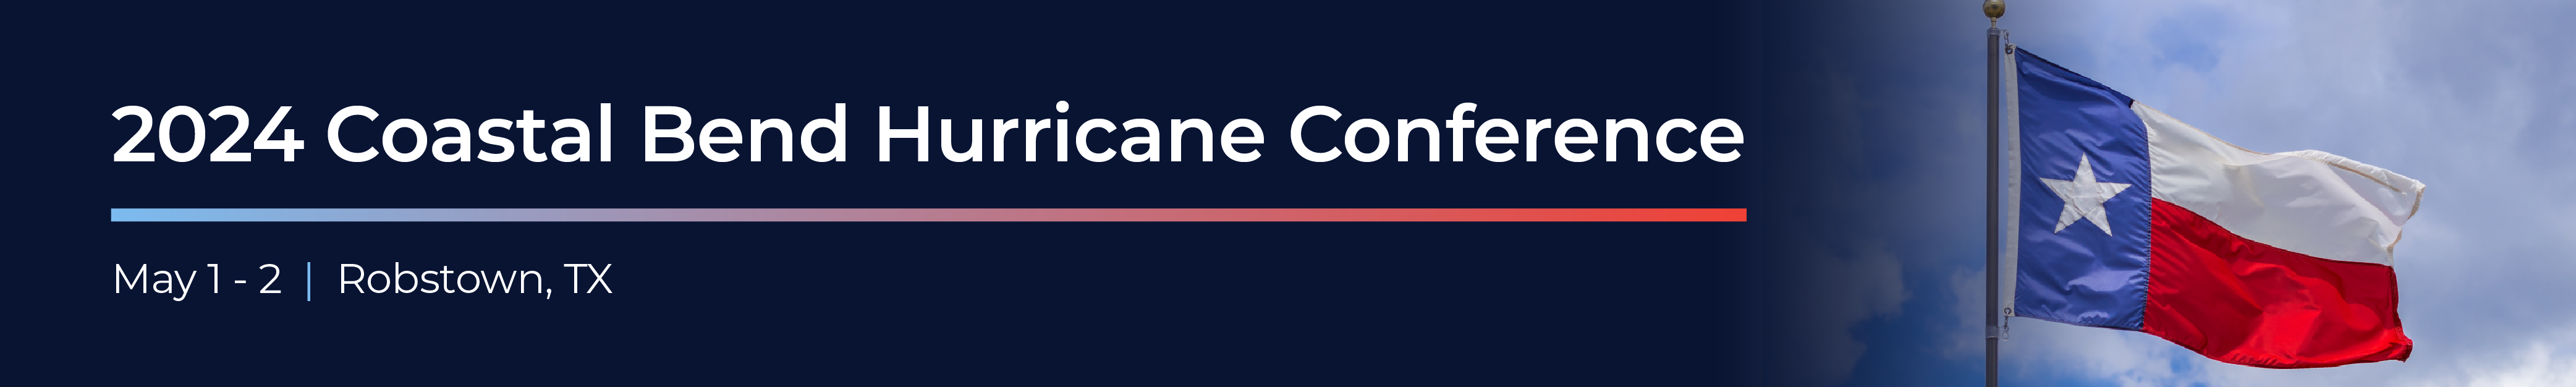 Coastal Bend Hurricane Conference_Web-Banner